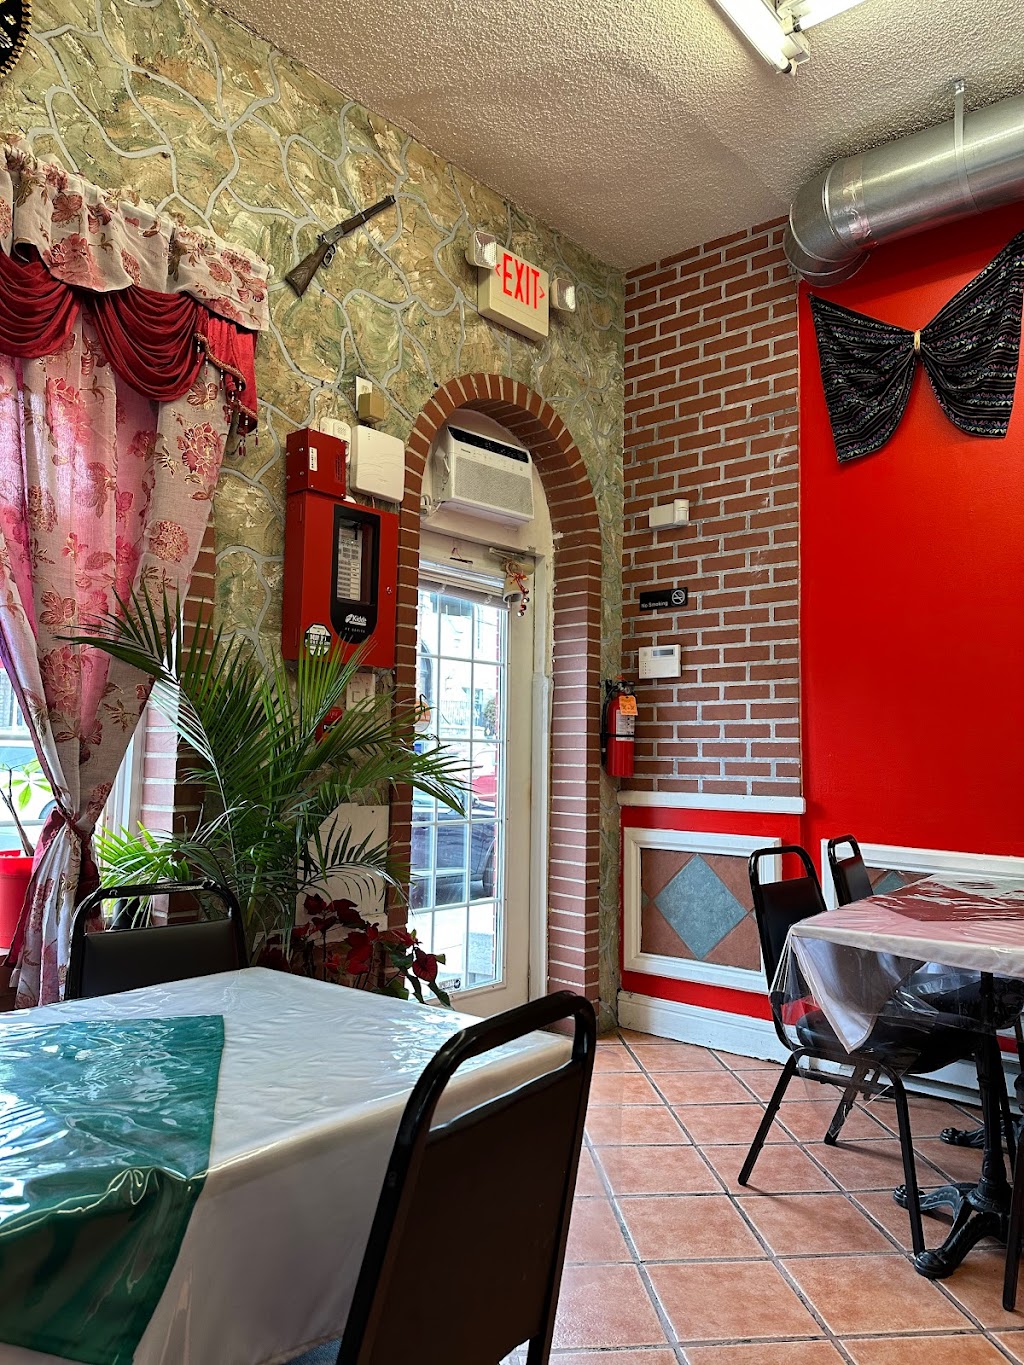 Los Juniors Mexican Cuisine & Pizza | 410 E Main St, Norristown, PA 19401 | Phone: (610) 279-3710